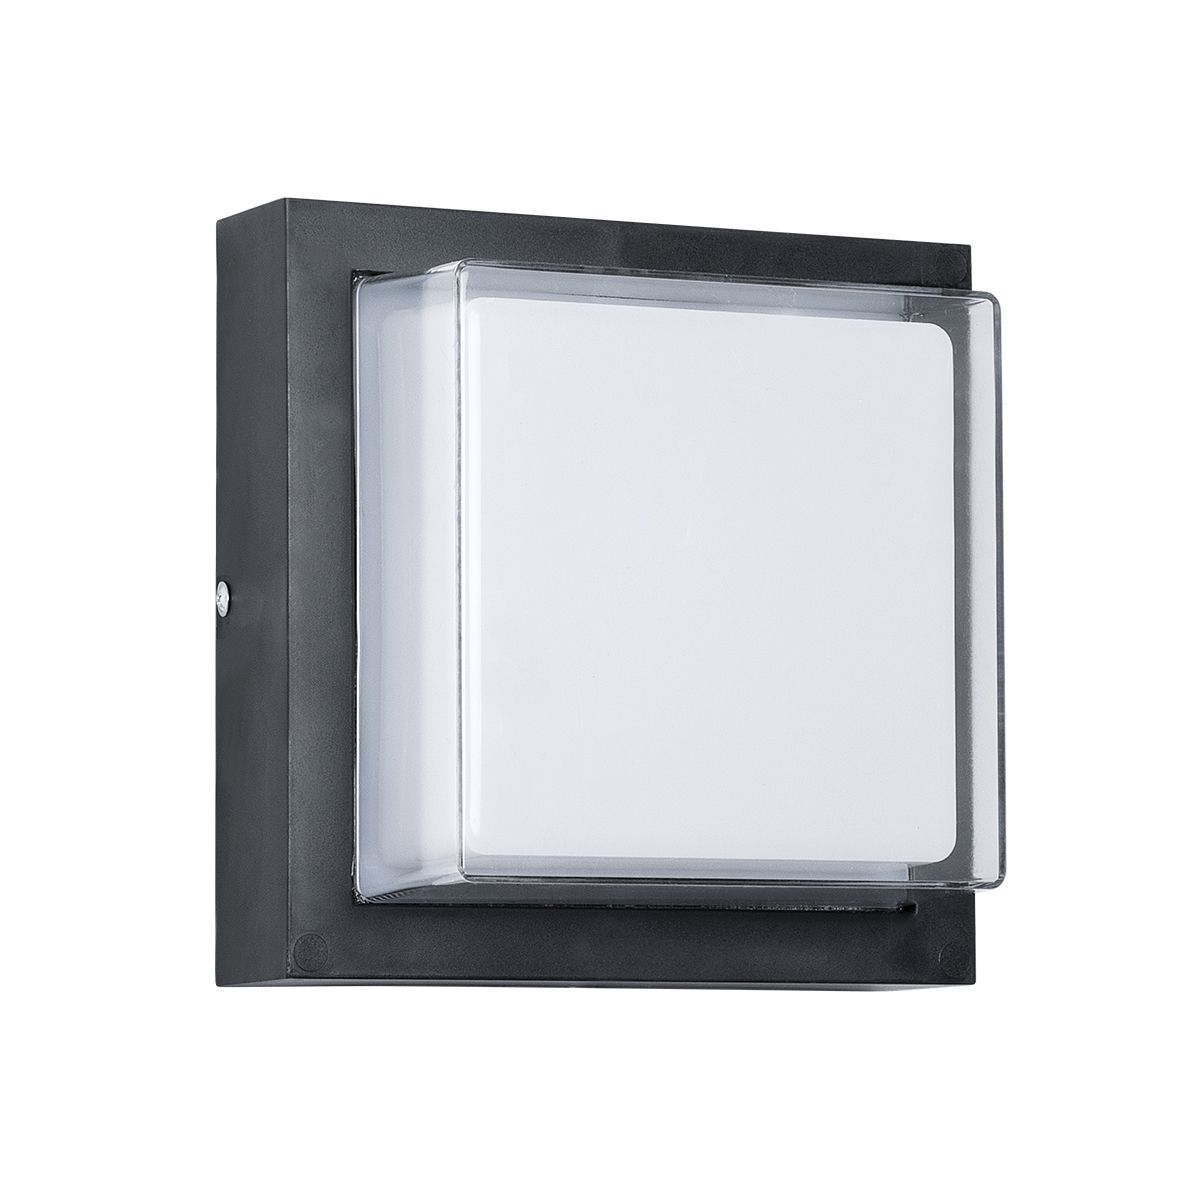 GLOBOSTAR® NEXUS 60767 Φωτιστικό Τοίχου – Απλίκα Αρχιτεκτονικού Φωτισμού Εσωτερικού/Εξωτερικού Χώρου Up or Down LED 10W 1050lm 120° AC175-265V Αδιάβροχο IP65 – Πλαστικό Σώμα – Φυσικό λευκό 4500K – Μ17 x Π17 x Υ9cm – Μαύρο – Bridgelux Chip – 3 Χρόνια Εγγύηση